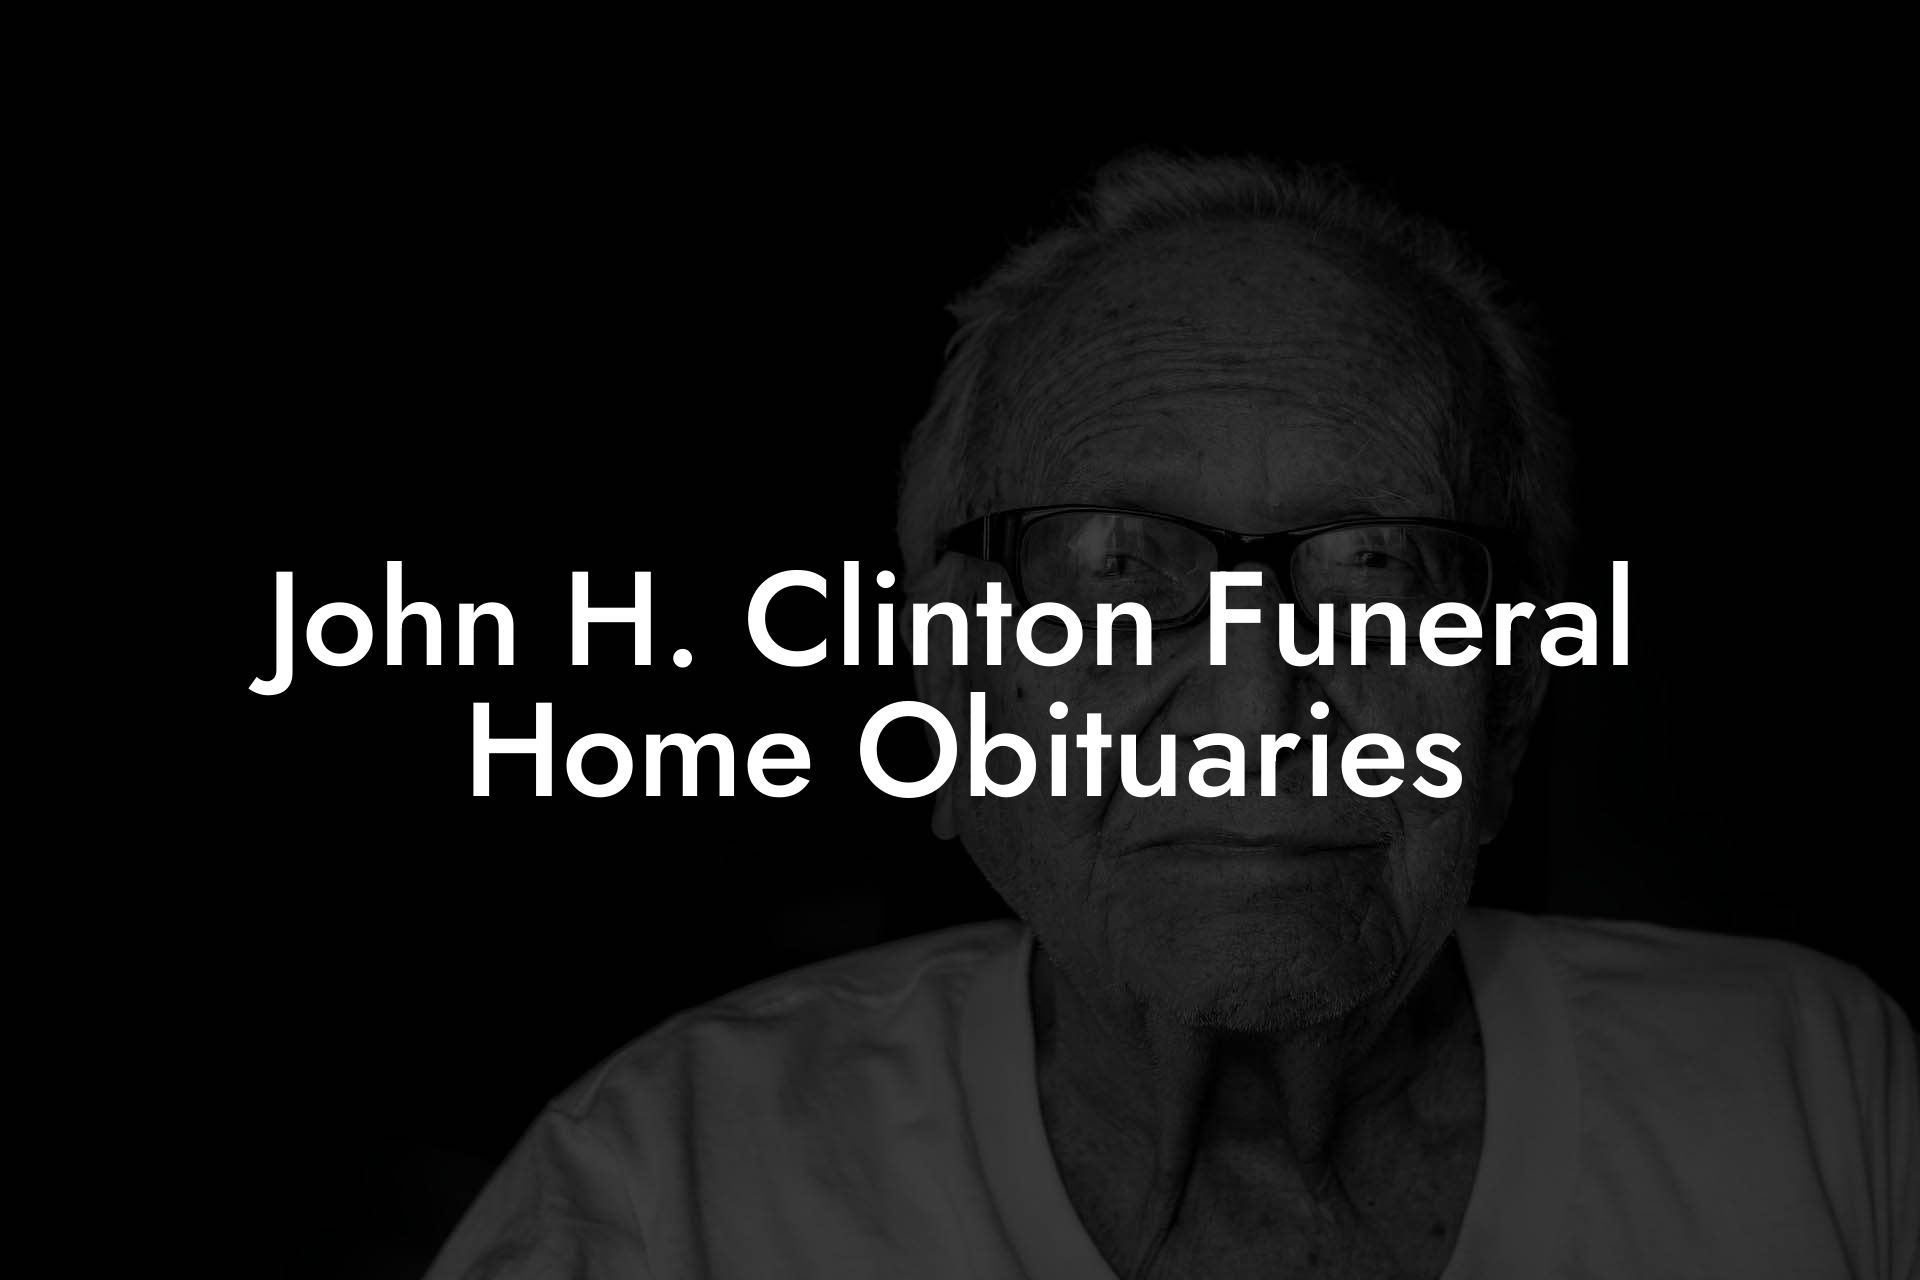 John H. Clinton Funeral Home Obituaries